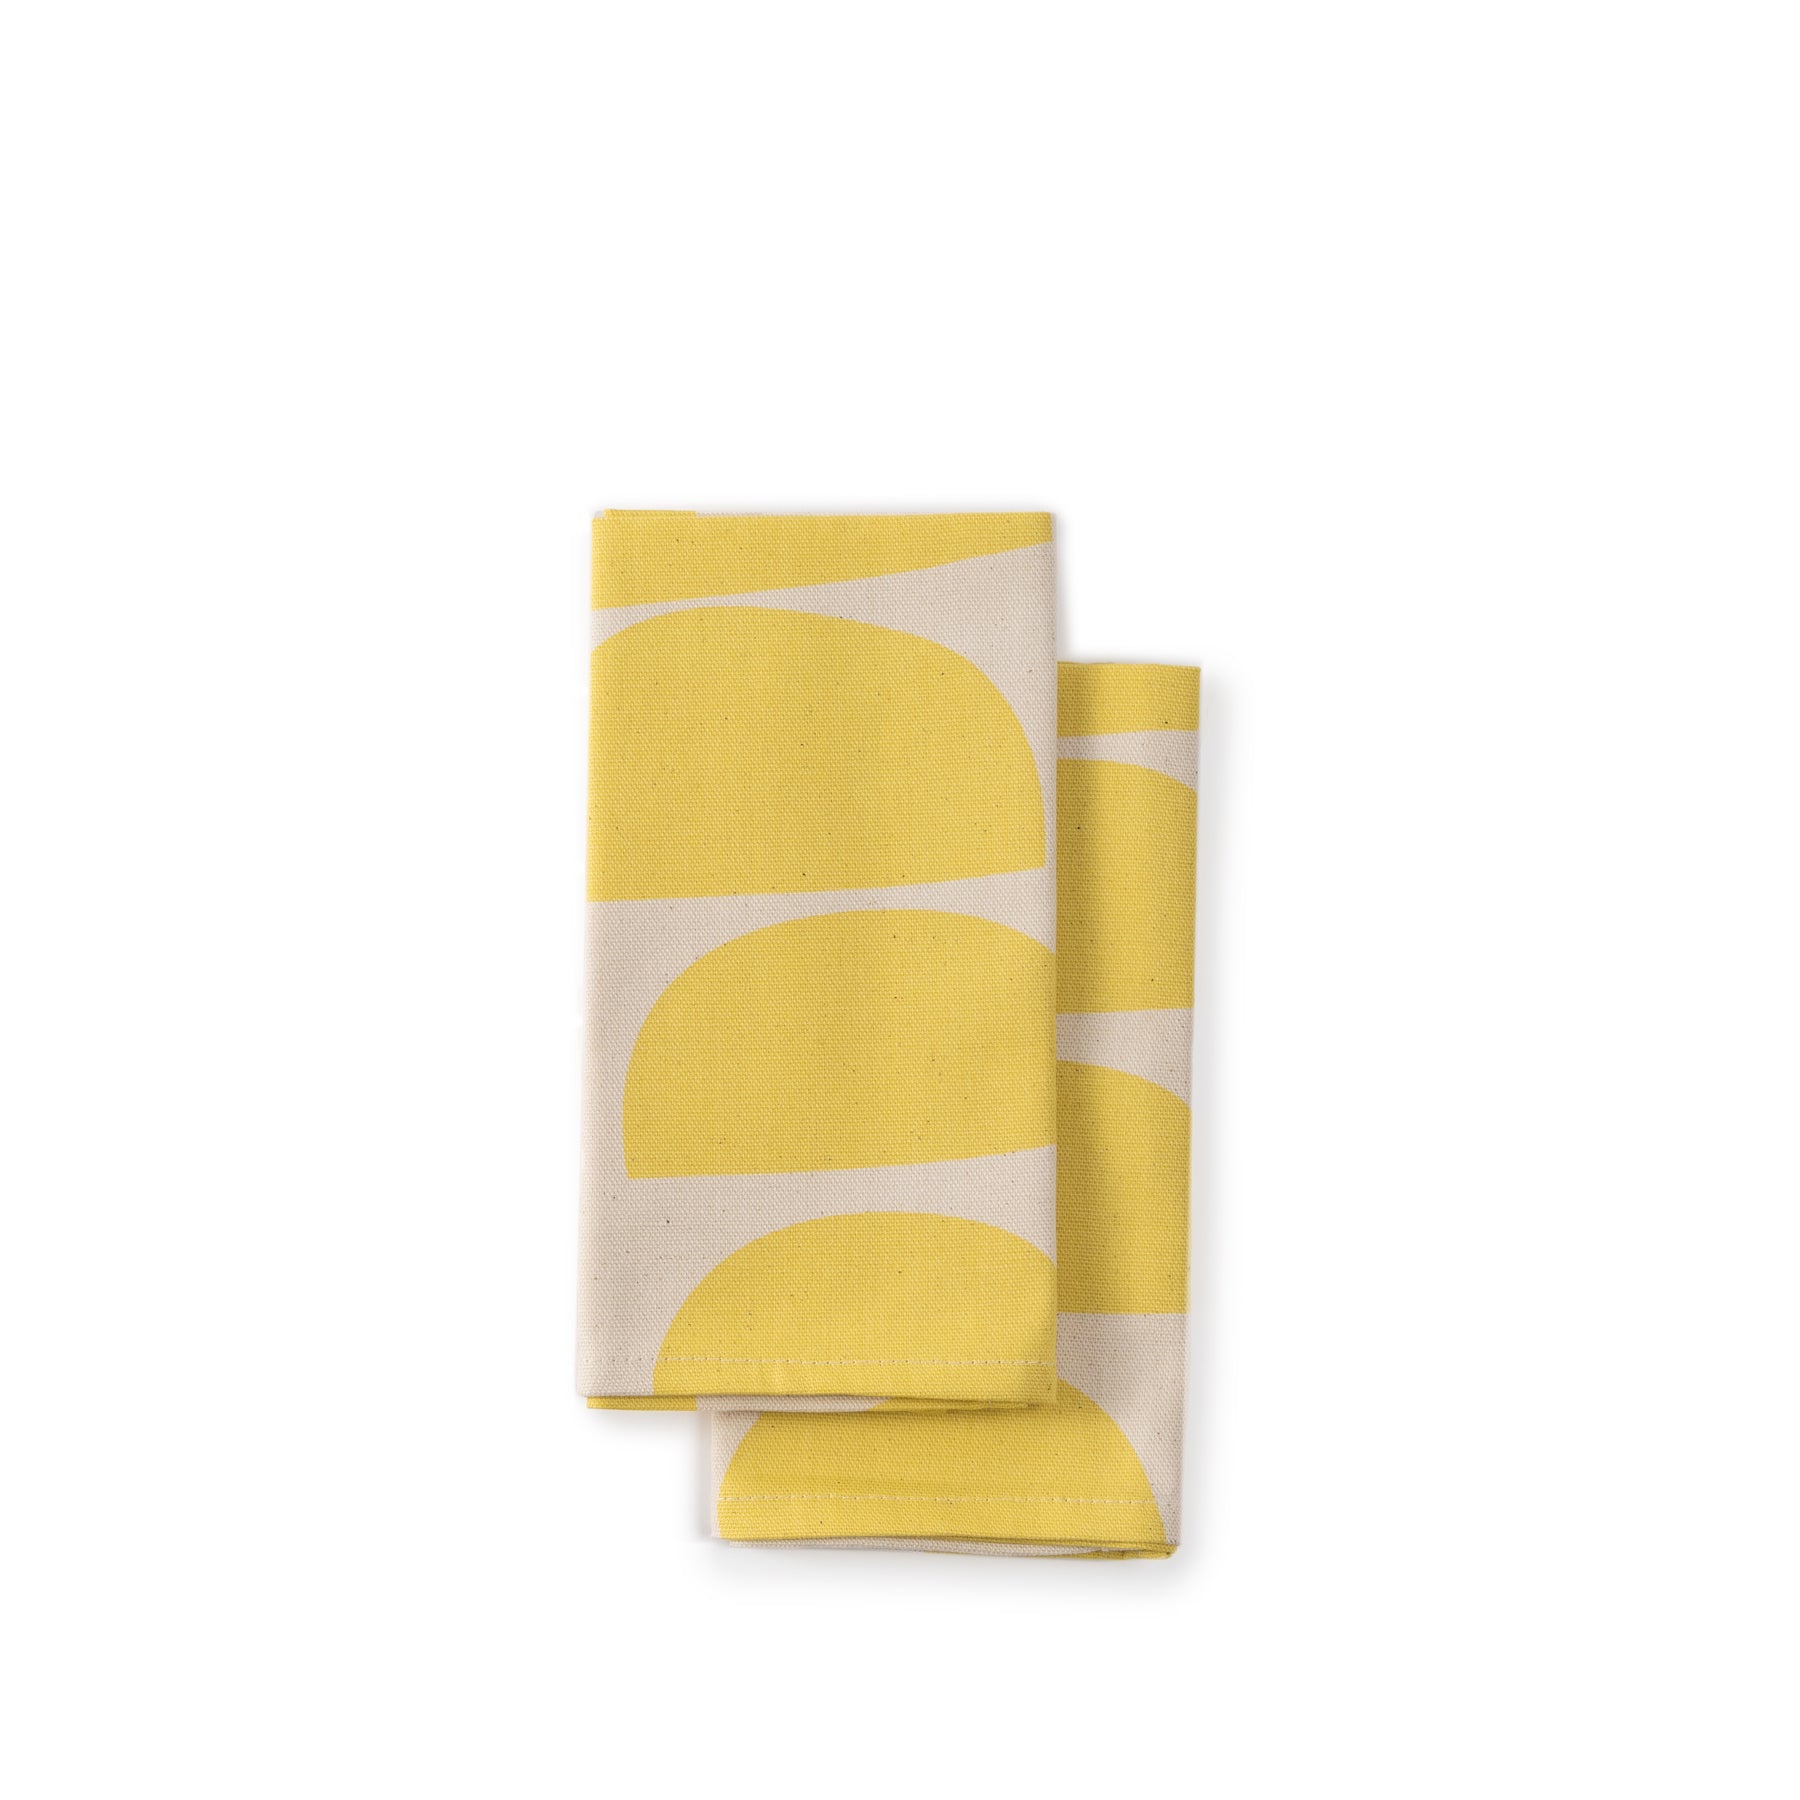 Bowls Napkin in Lemon Slice (Set of 2) Zoom Image 1